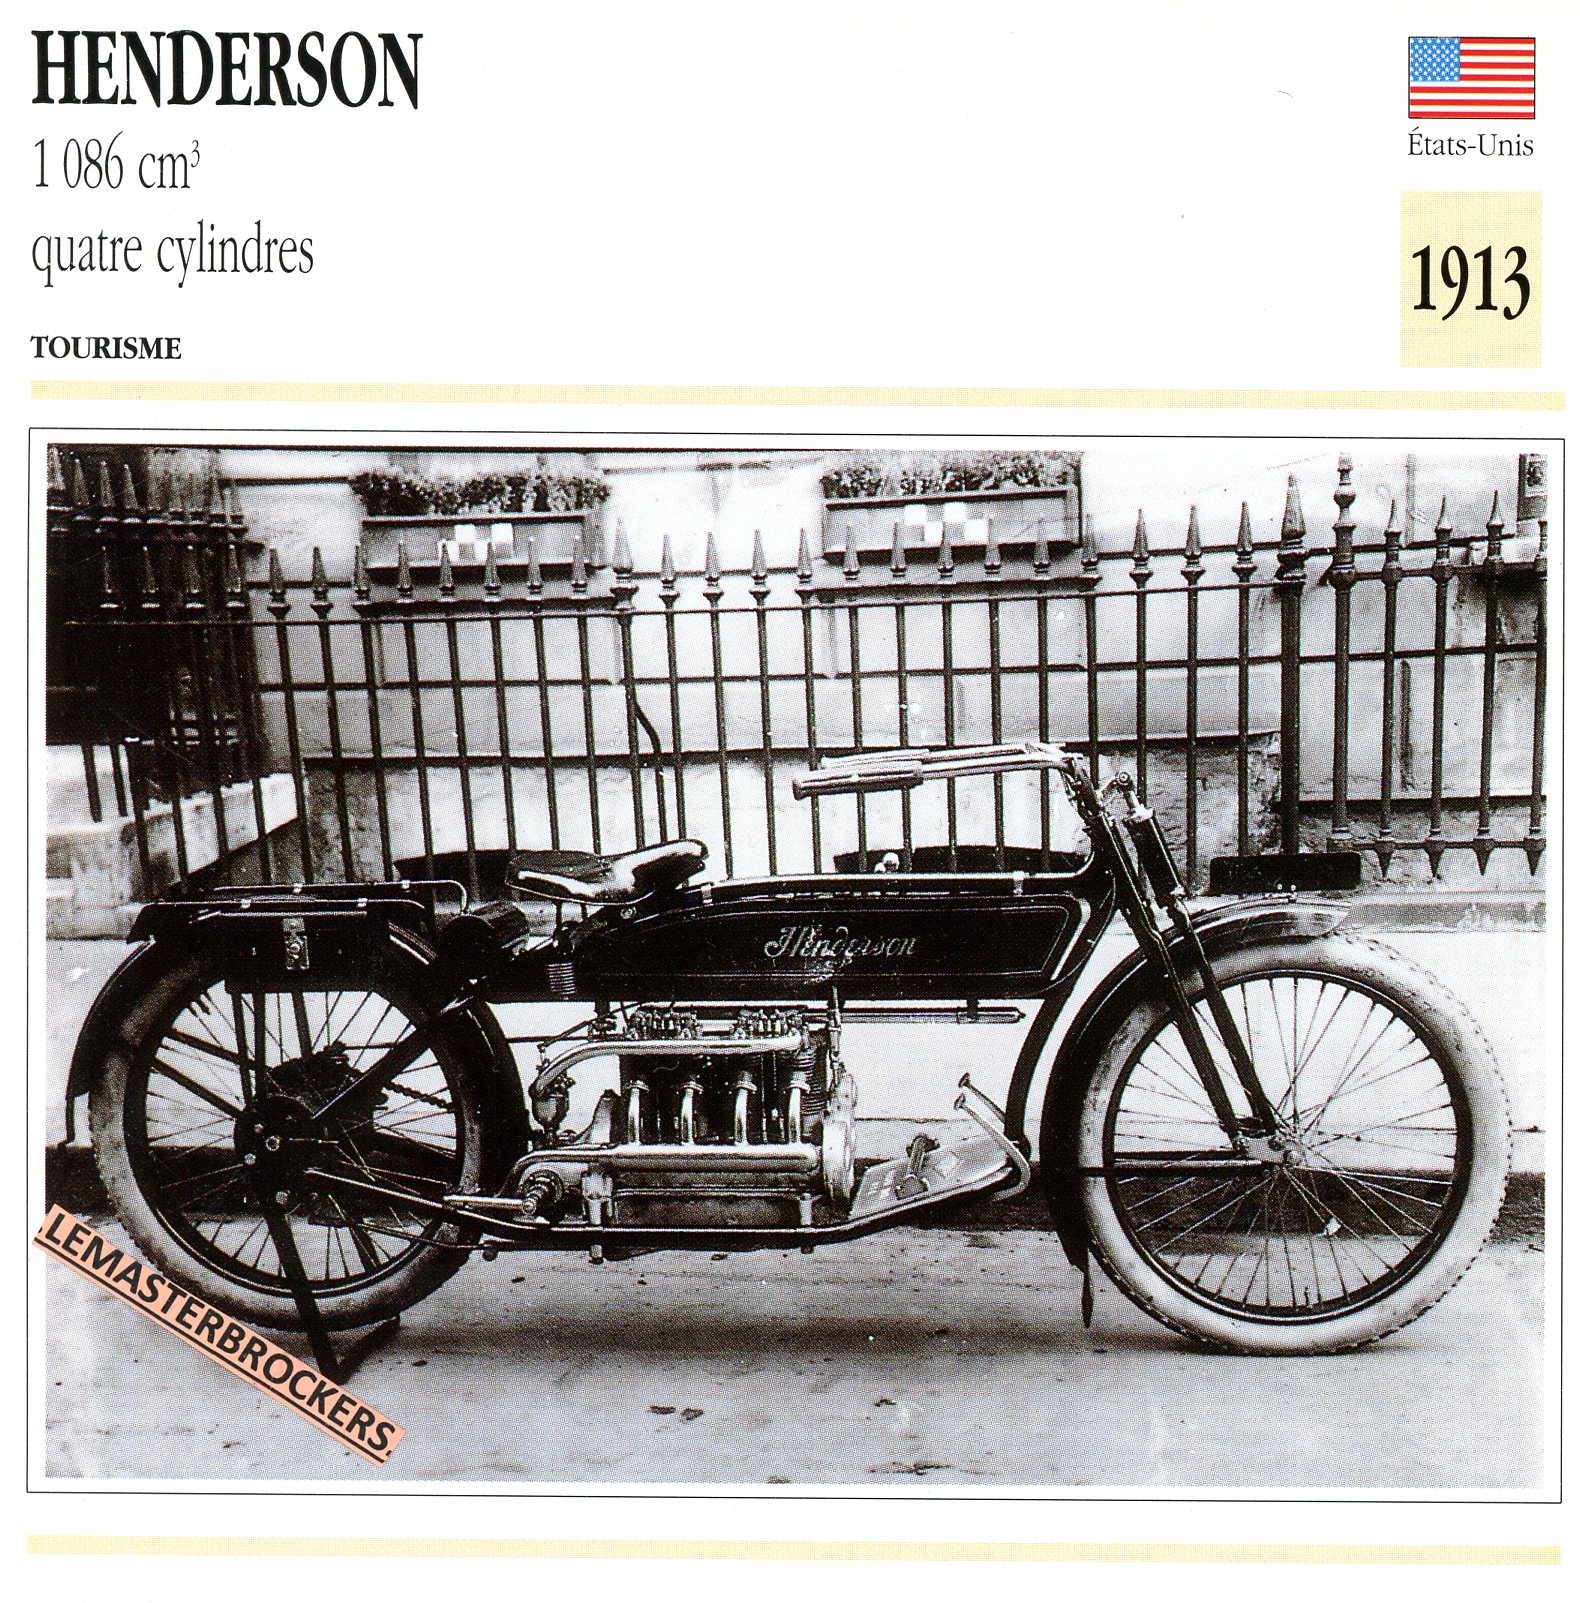 HENDERSON-1086CC-1913-FICHE-MOTO-LEMASTERBROCKERS